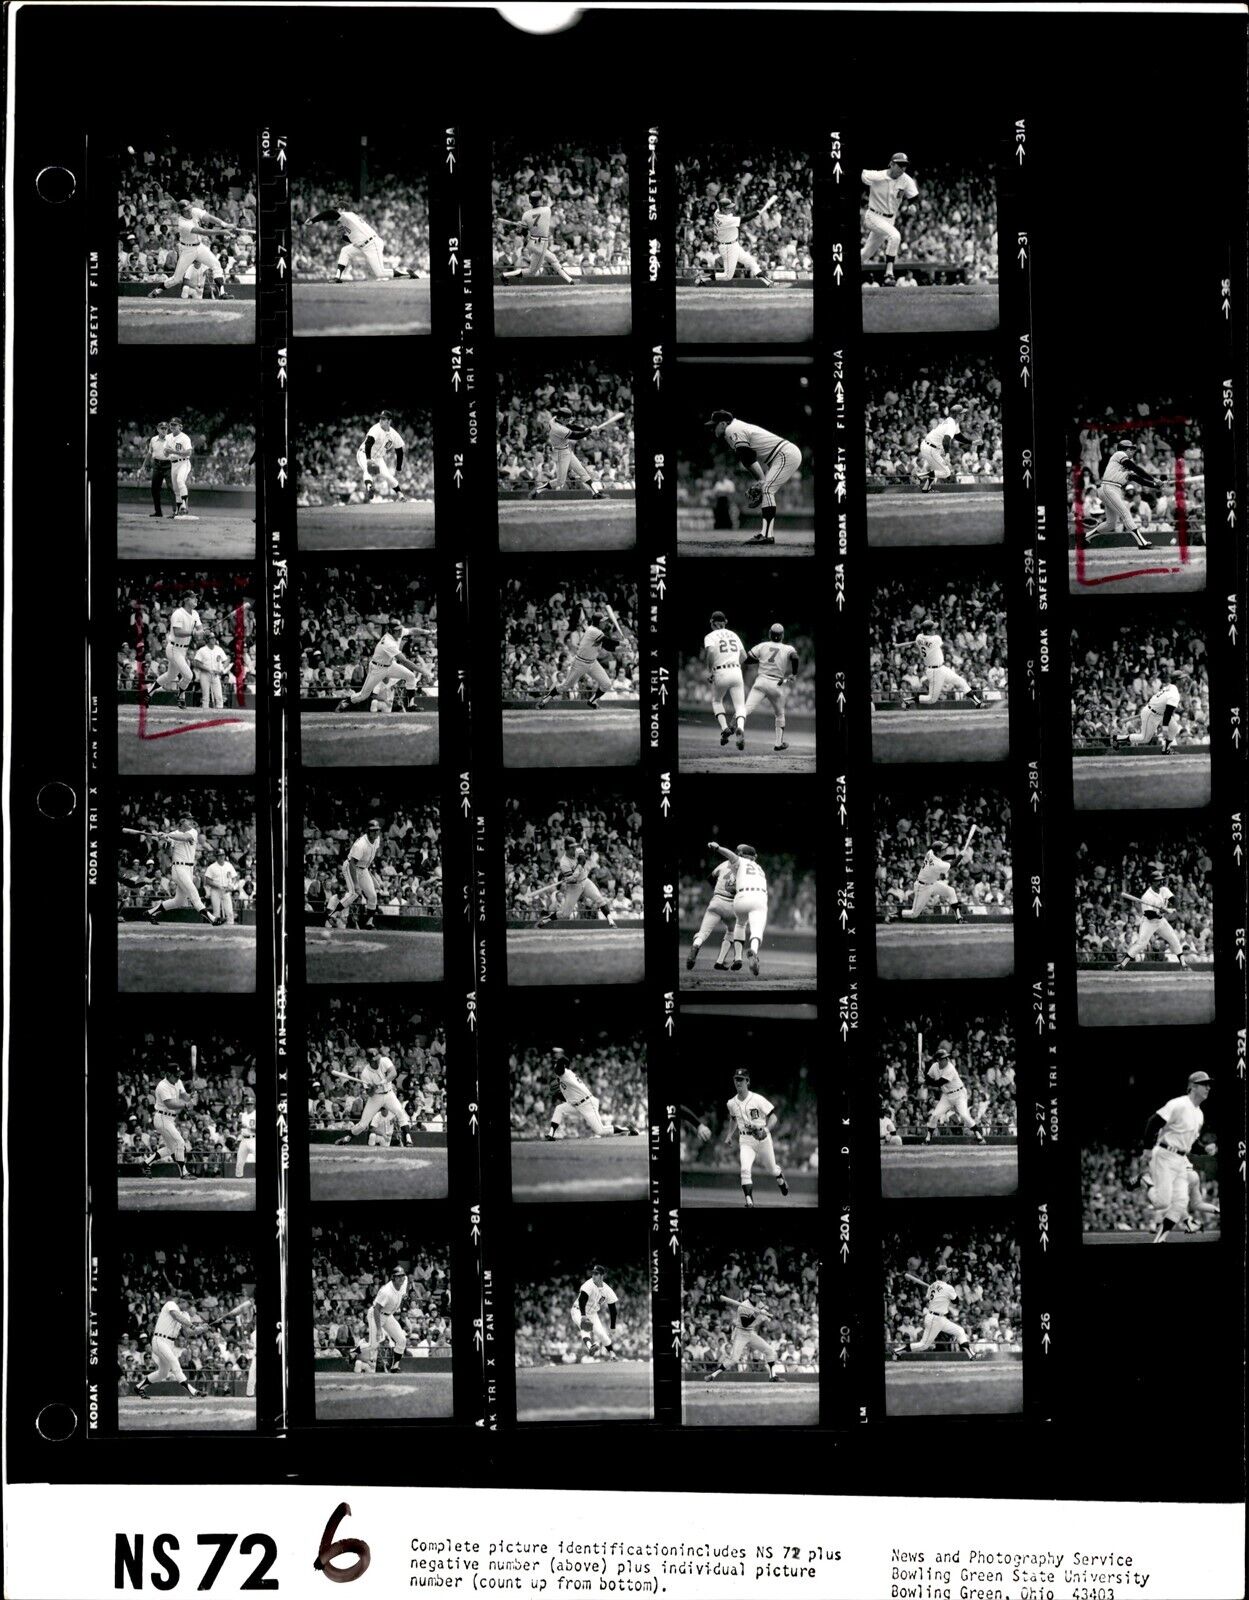 LD323 1973 Original Contact Sheet Photo ROD CAREW MINN TWINS vs DETROIT TIGERS